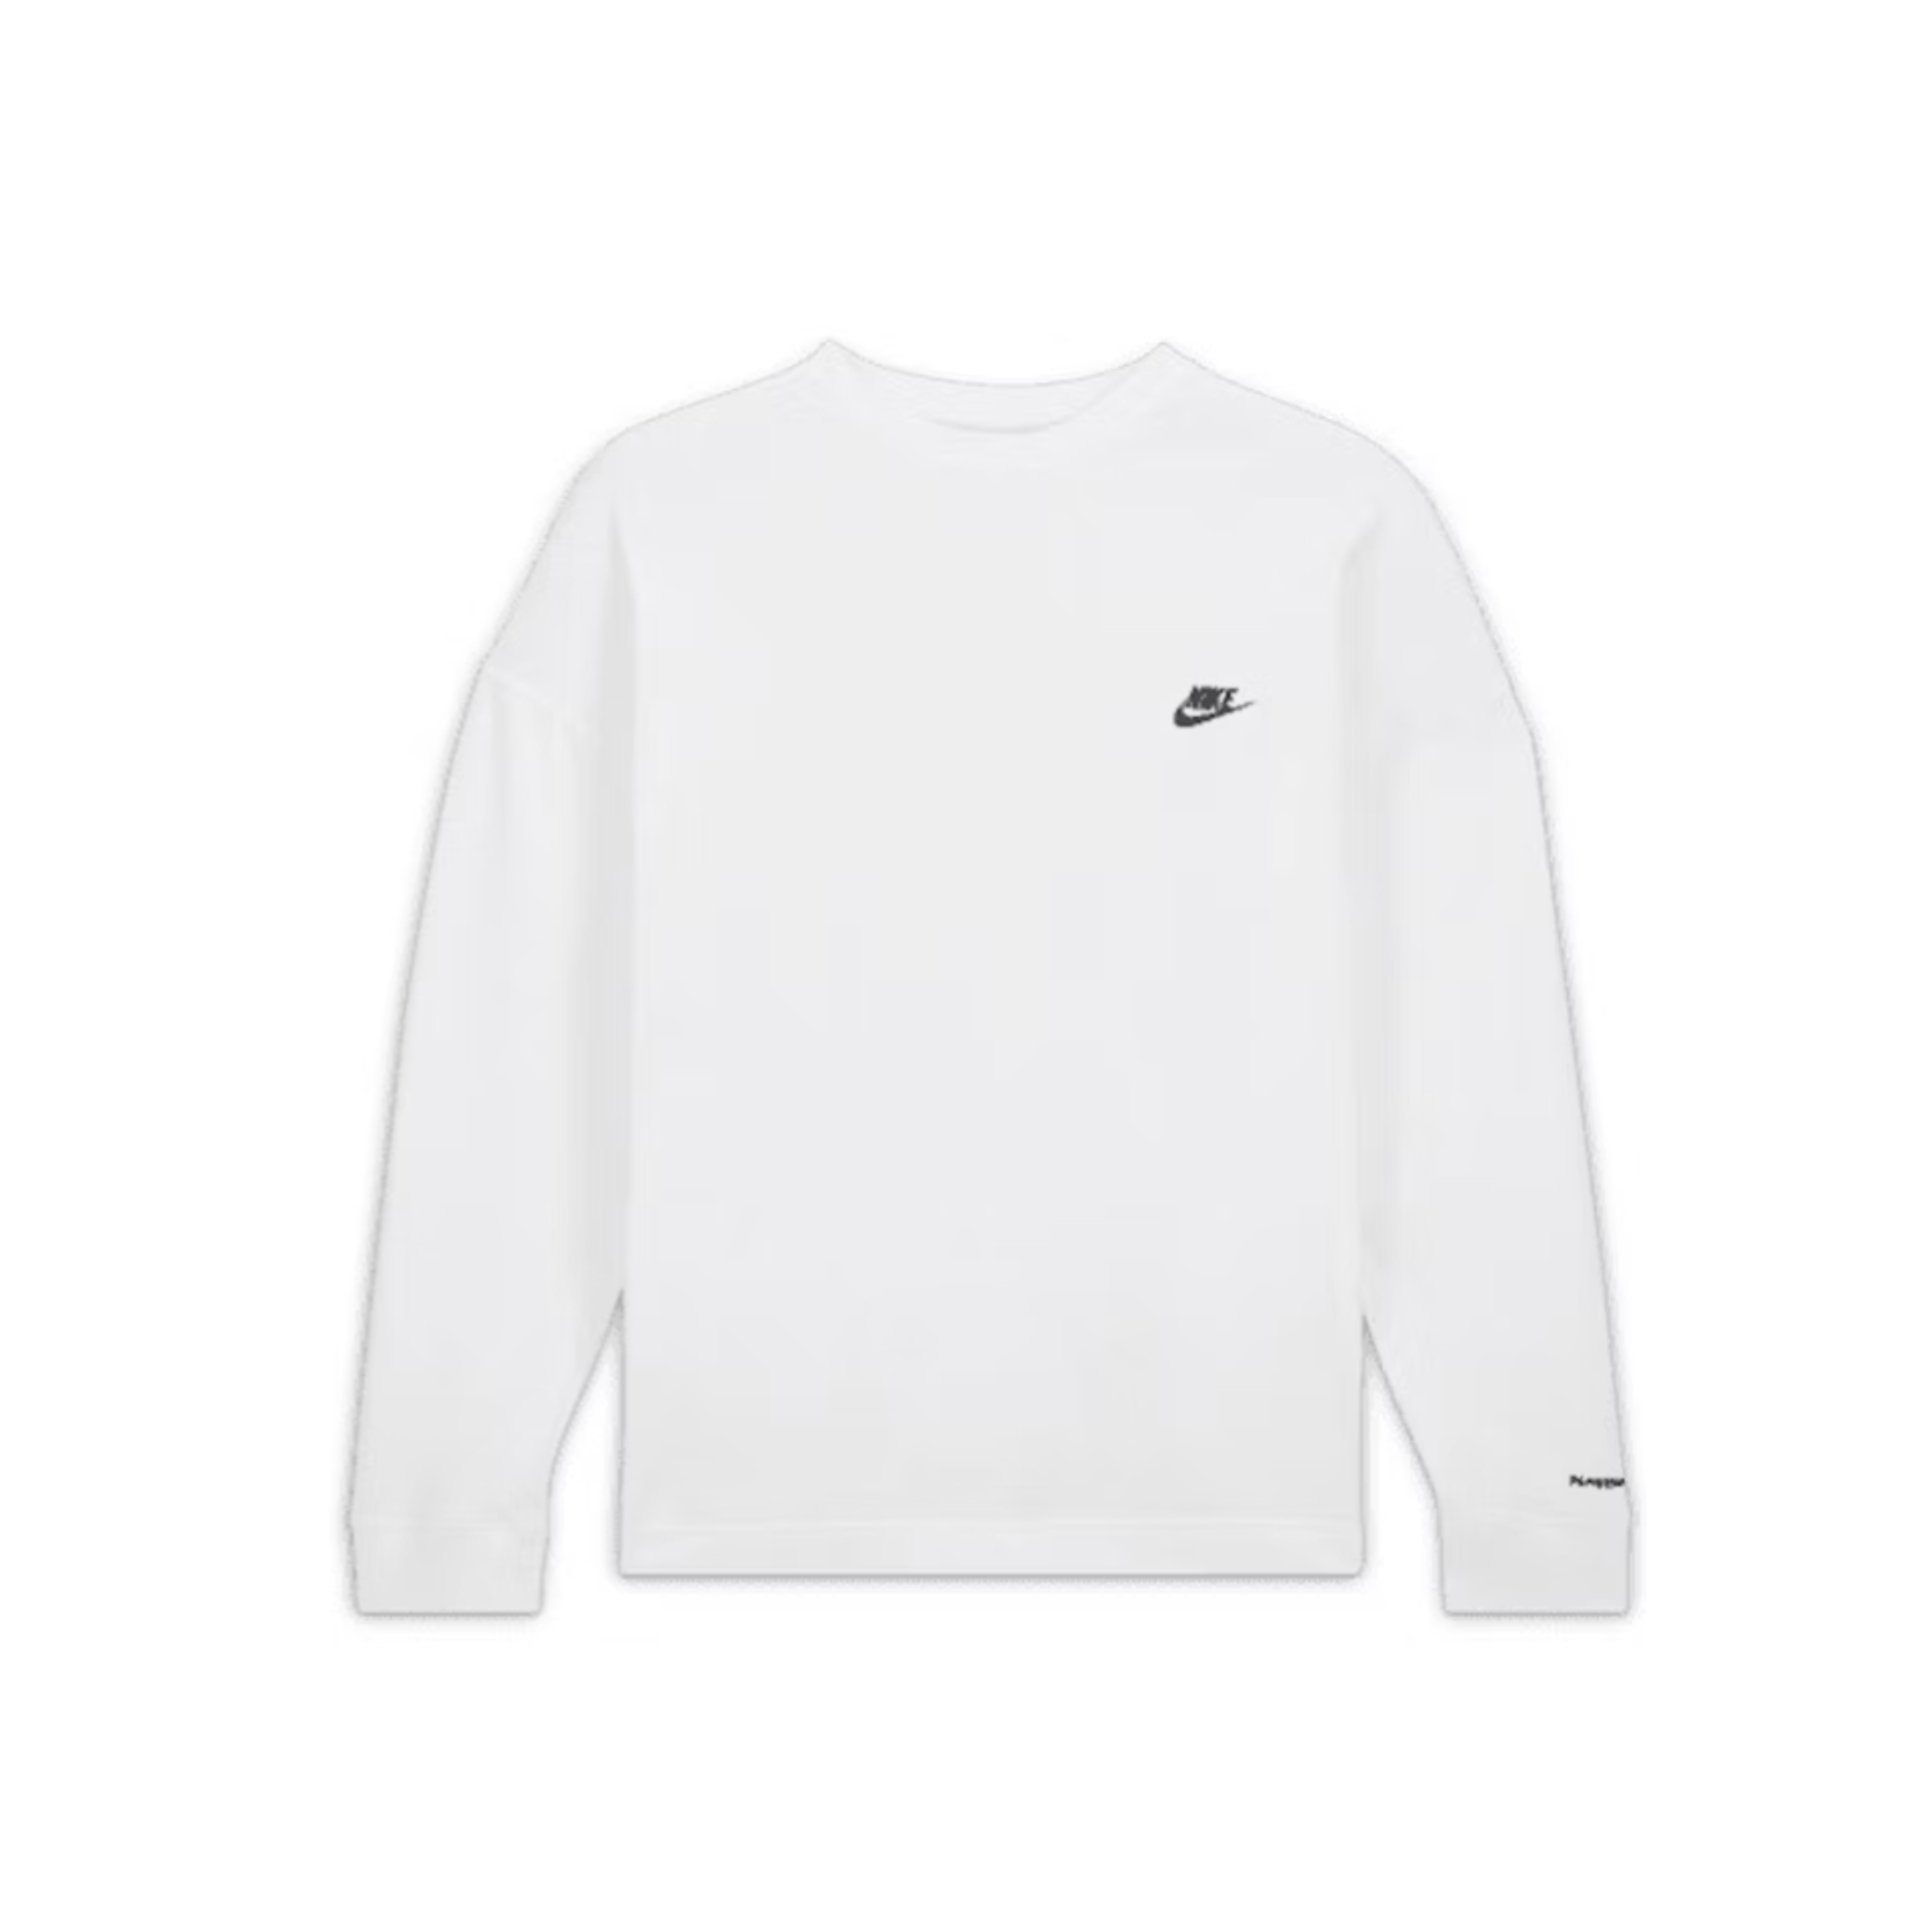 Nike x PEACEMINUSONE G-Dragon Long Sleeve T-shirt 'White'